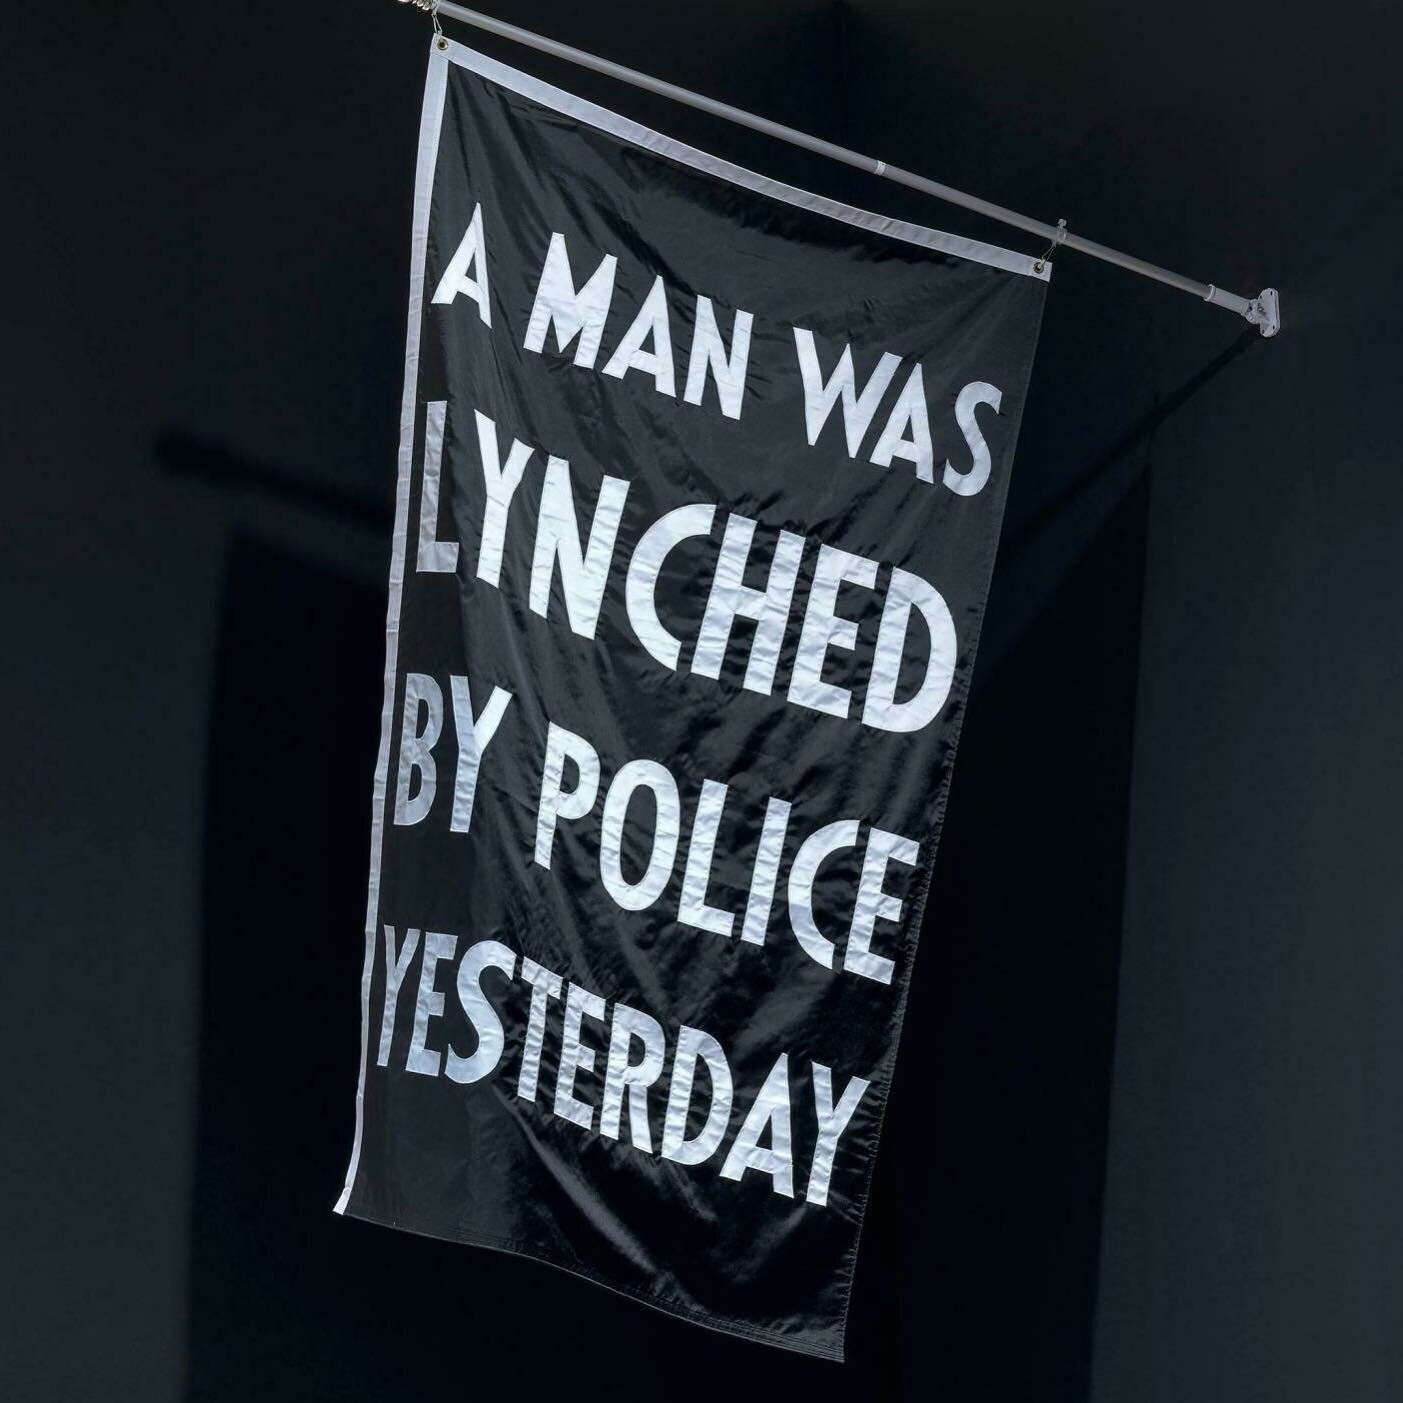 Dread Scott, A Man Was Lynched by Police Yesterday, 2015, nylon, 84.5 x 52.5 x 1/8 inches

@dreadscottart @cacnola @smackmellon @mccollcenter @aampmuseum @rowanuartgallery @rushartsphilly @seccacontempart